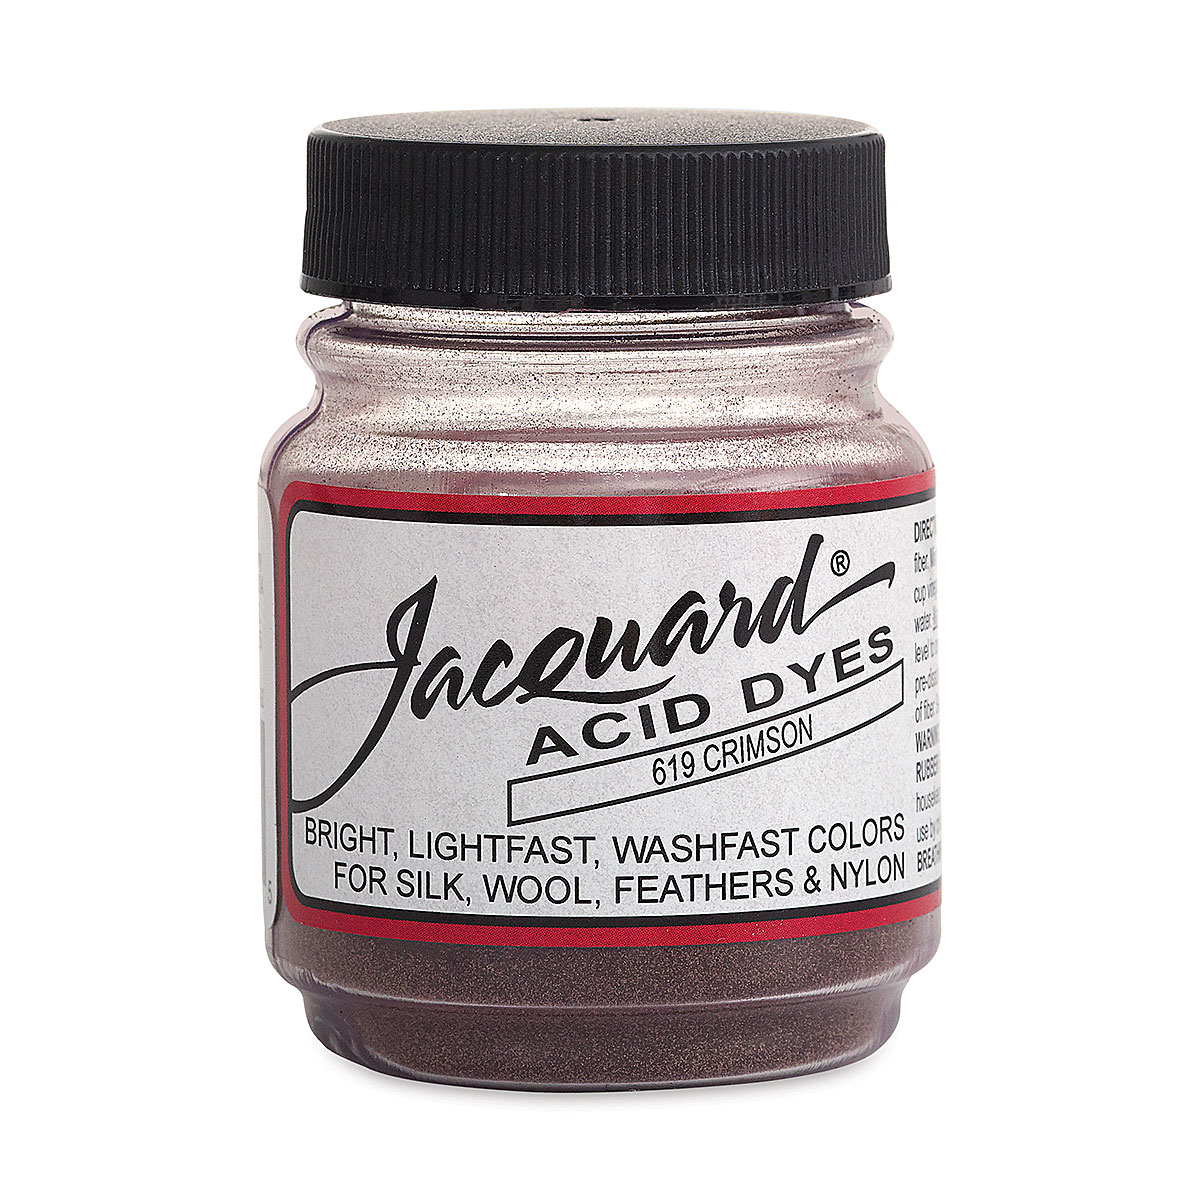 Jacquard Acid Dye #621 Sky Blue 1/2oz - The Art Store/Commercial Art Supply